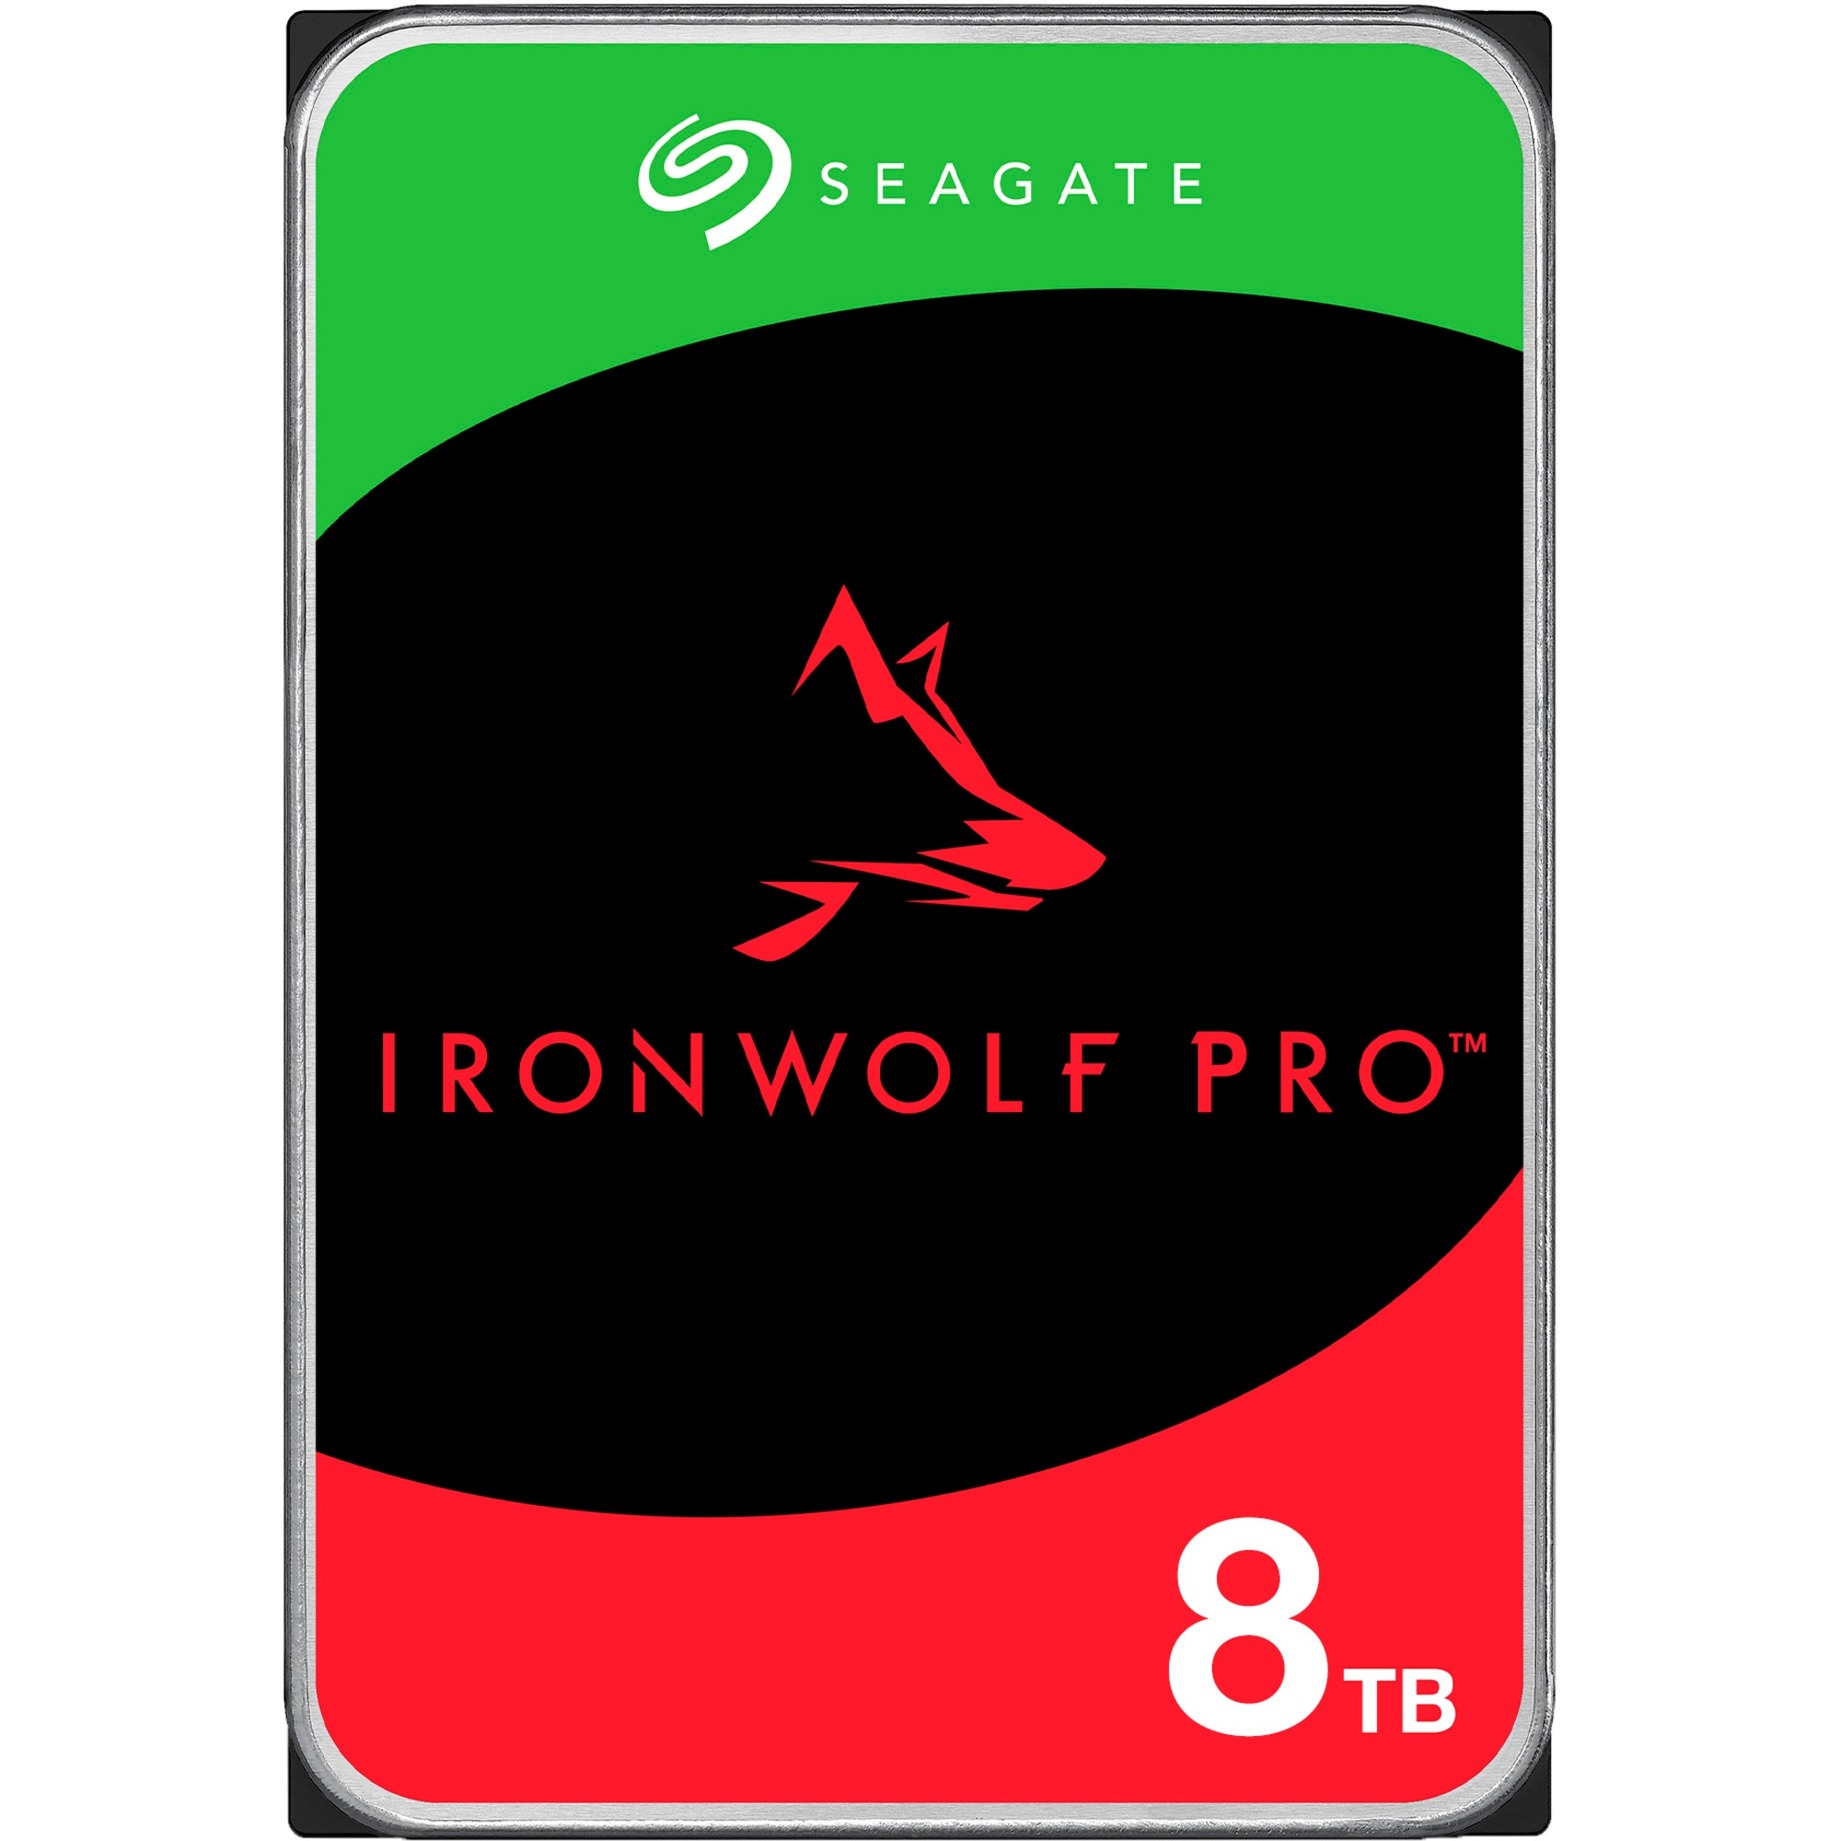 IronWolf Pro NAS 8 TB CMR